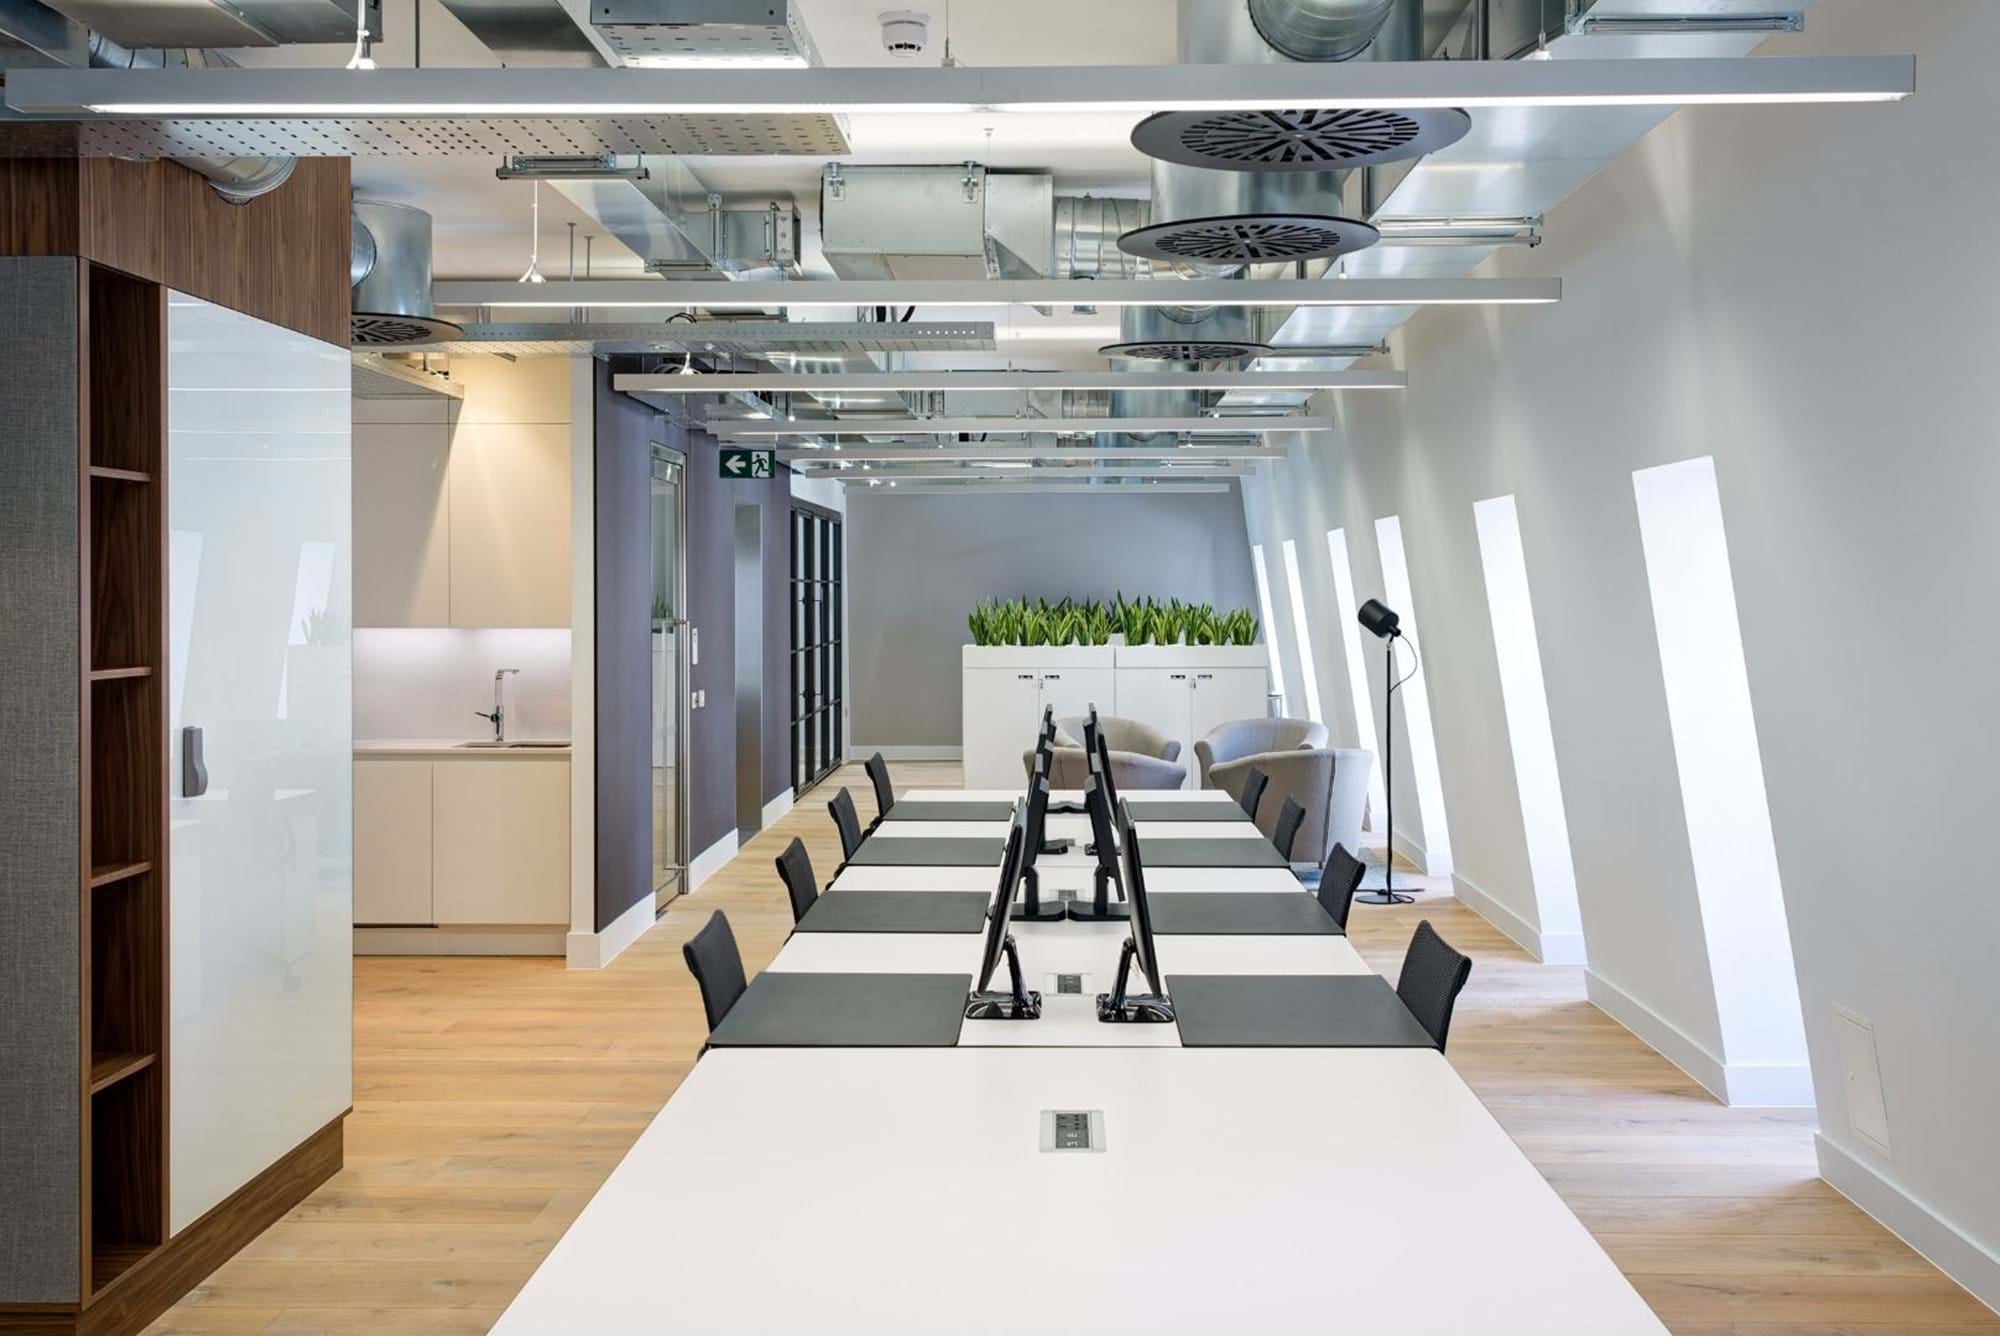 Modus Workspace office design, fit out and refurbishment - Craigewan - Graigewan 11 highres sRGB.jpg